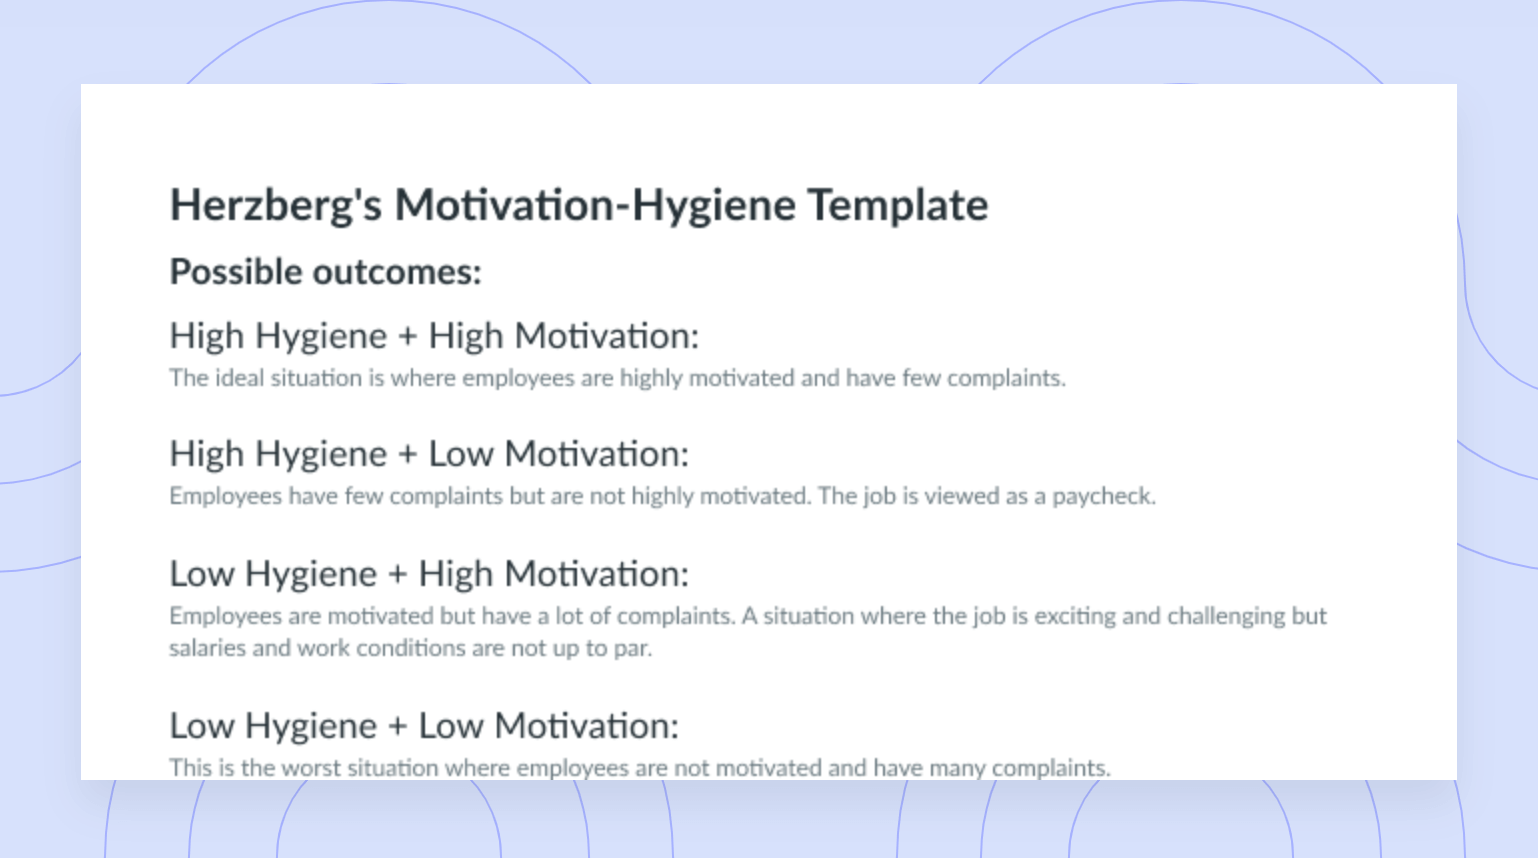 Herzberg’s Motivation-Hygiene Theory Template